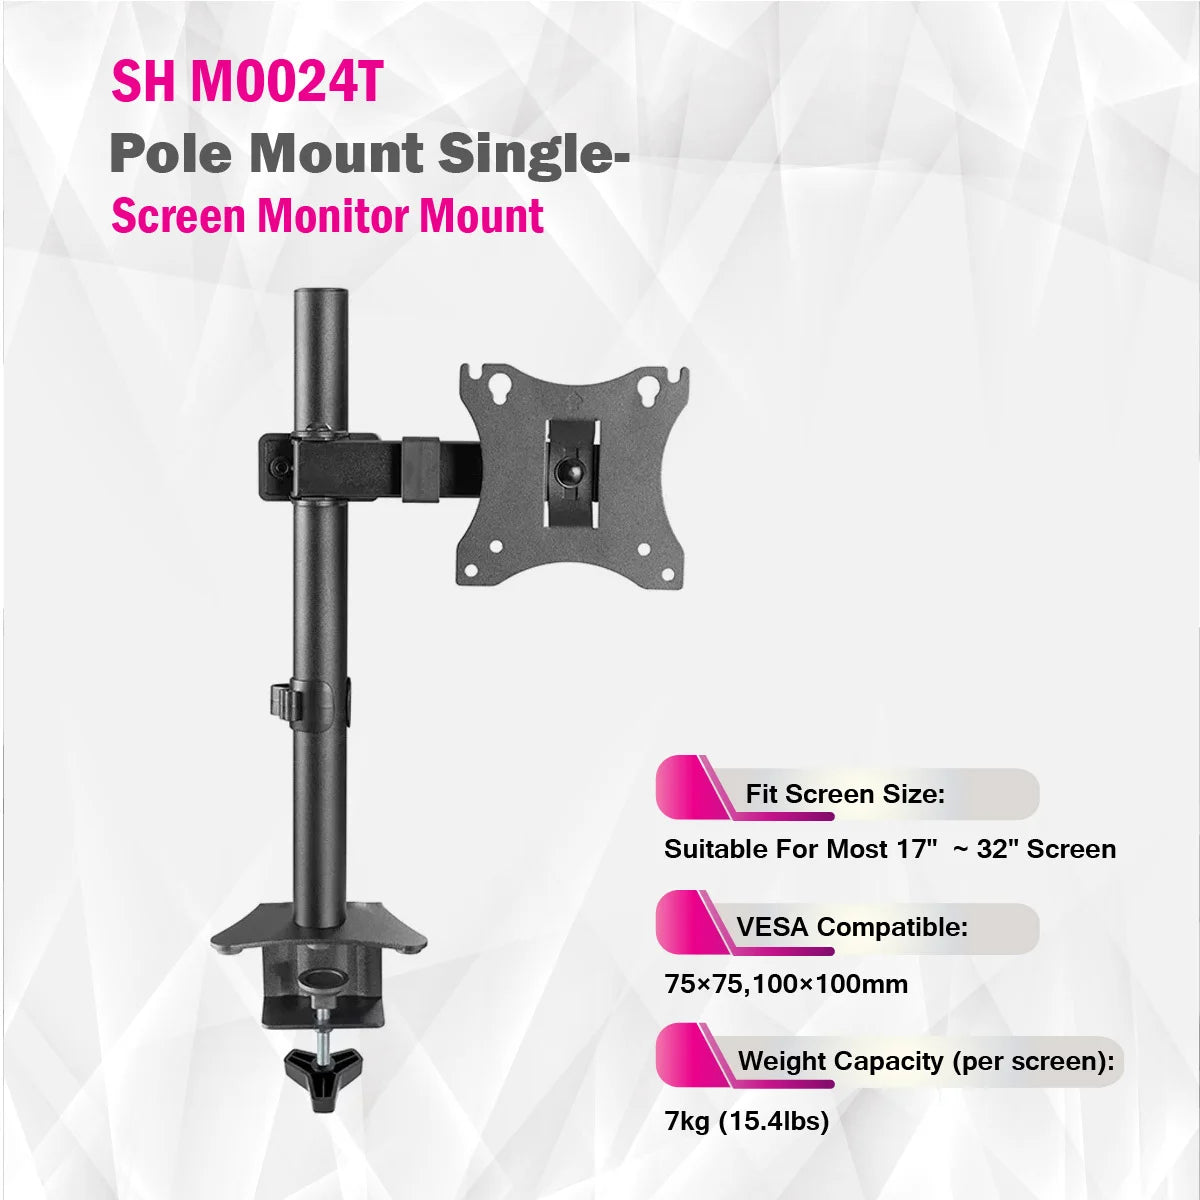 SkillTech - SH M0024T - Pole Mount Single-Screen Monitor Mount